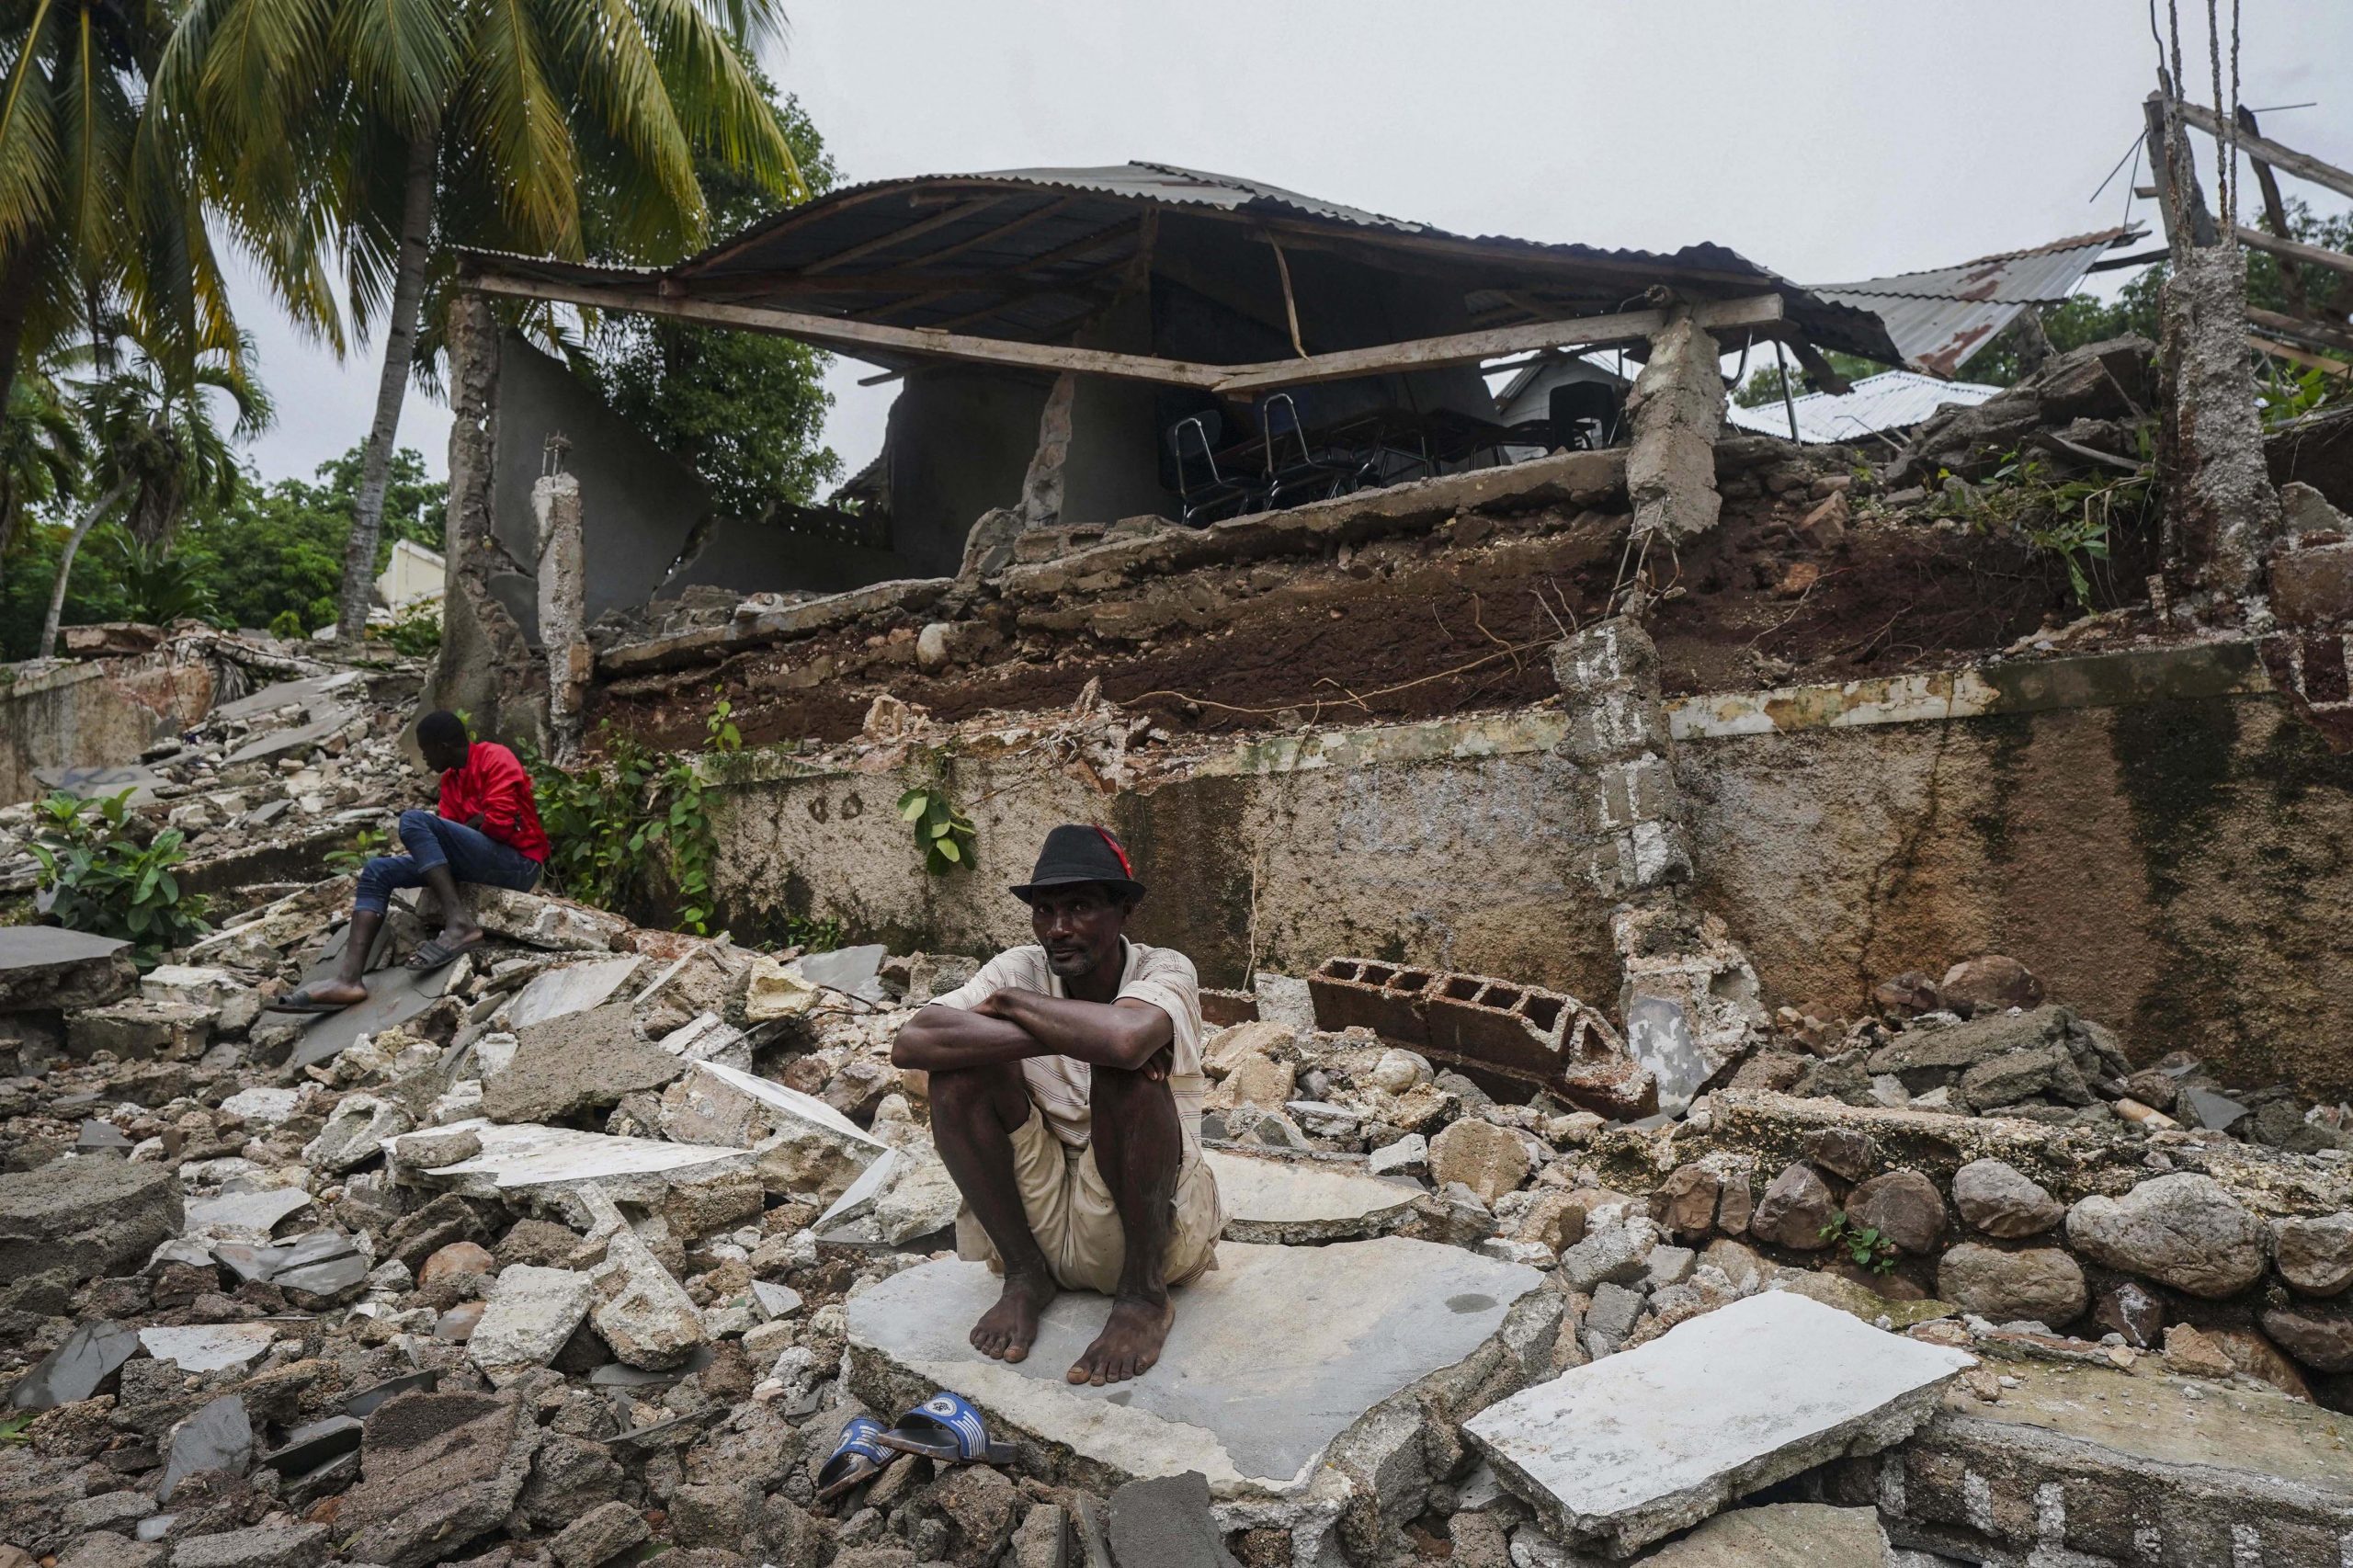 Desperation, pressure for aid increase in Haiti after quake